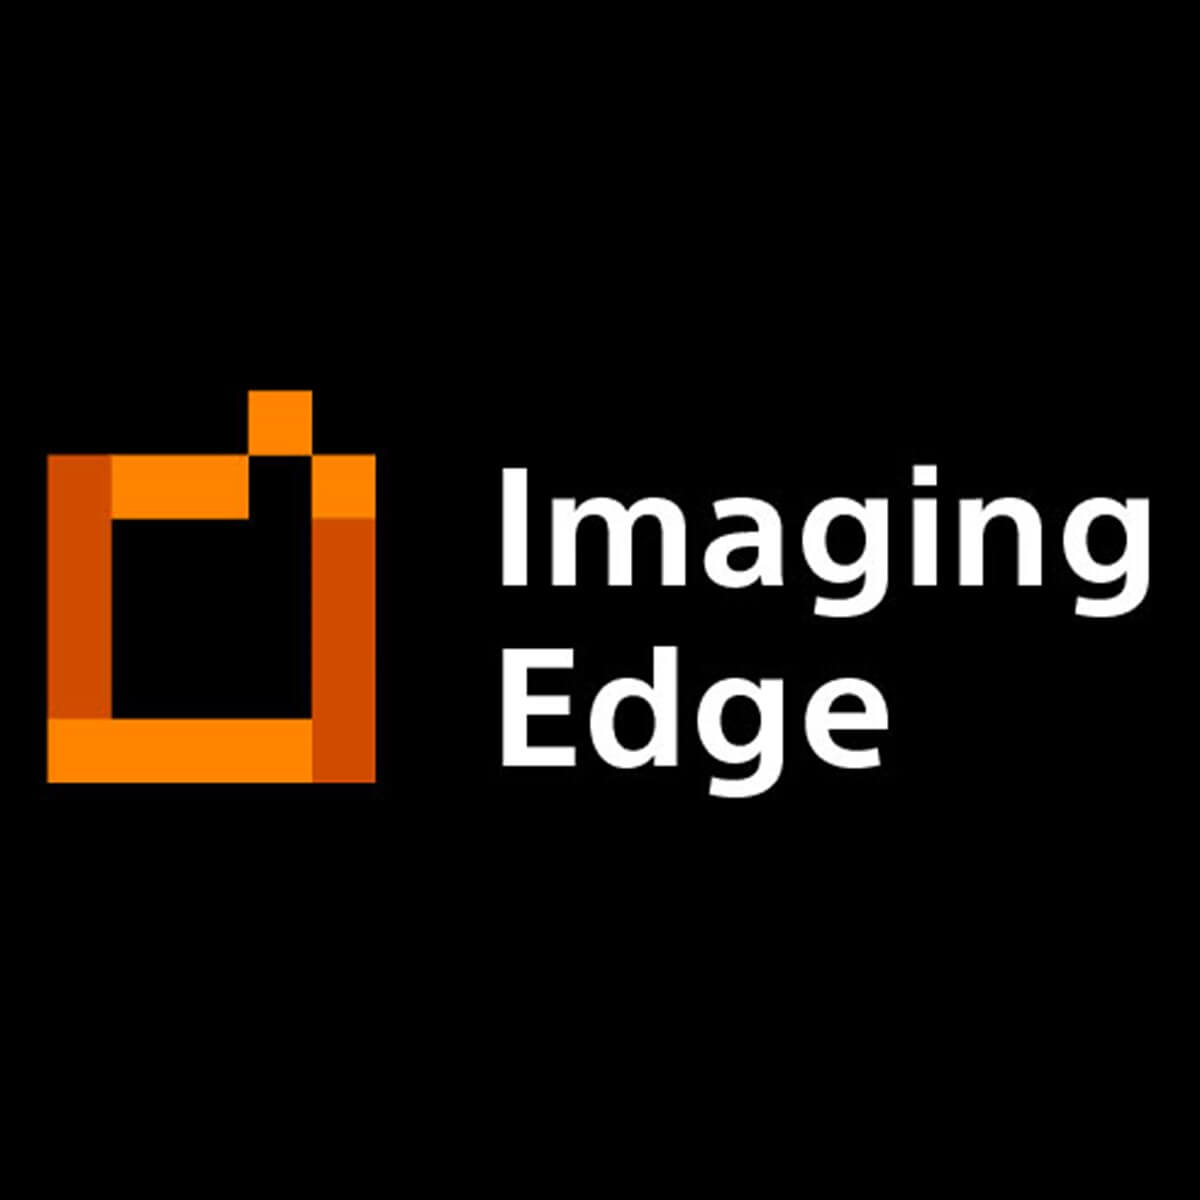 imaging edge 43 نرم افزار imagingedge (انتقال عکس از دوربین به گوشی،مختص به دوربین های سونی)